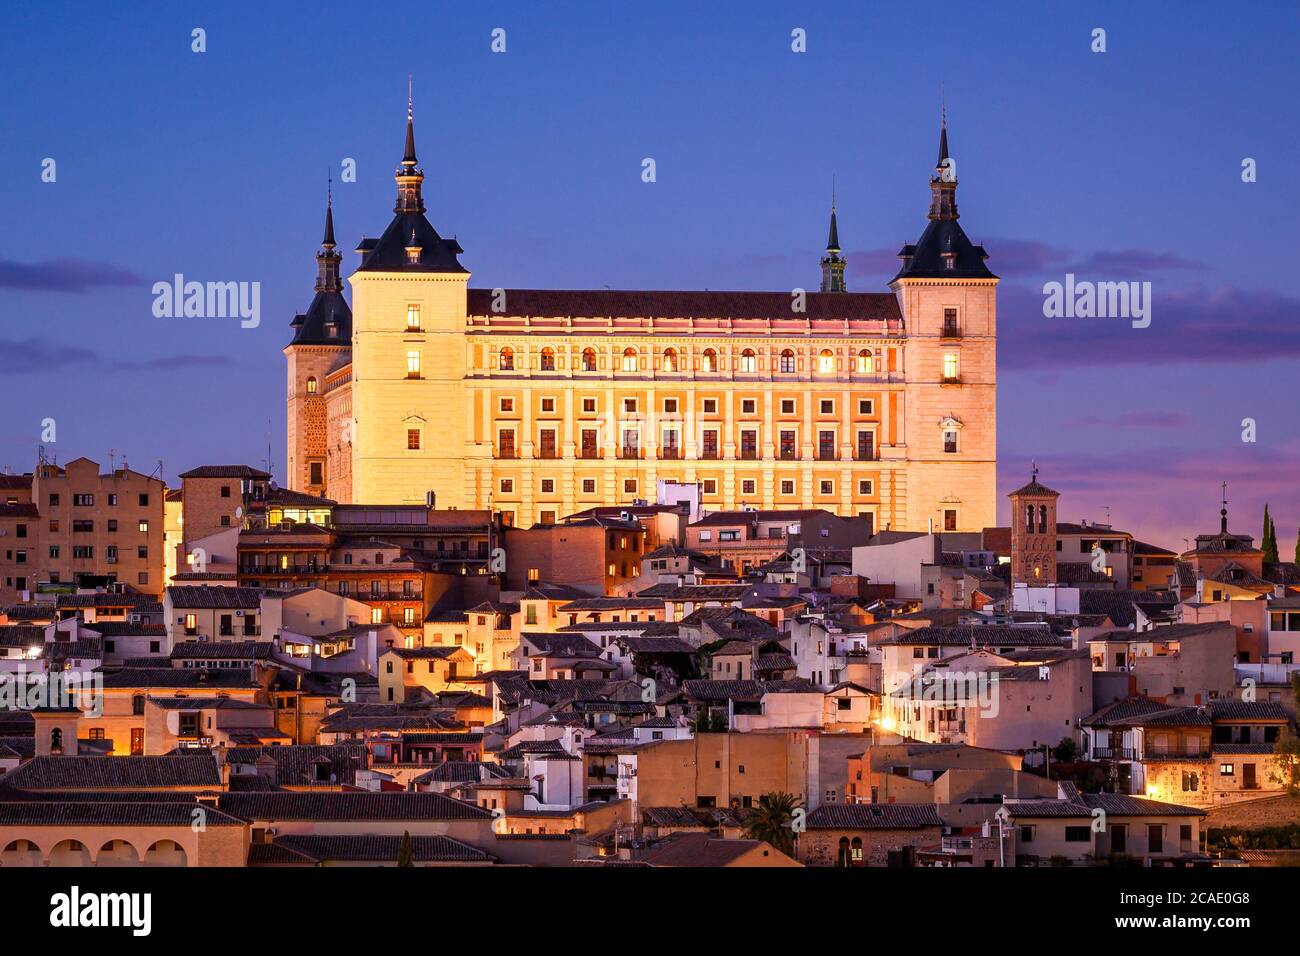 Alcazar palace in Toledo, Spain Stock Photo